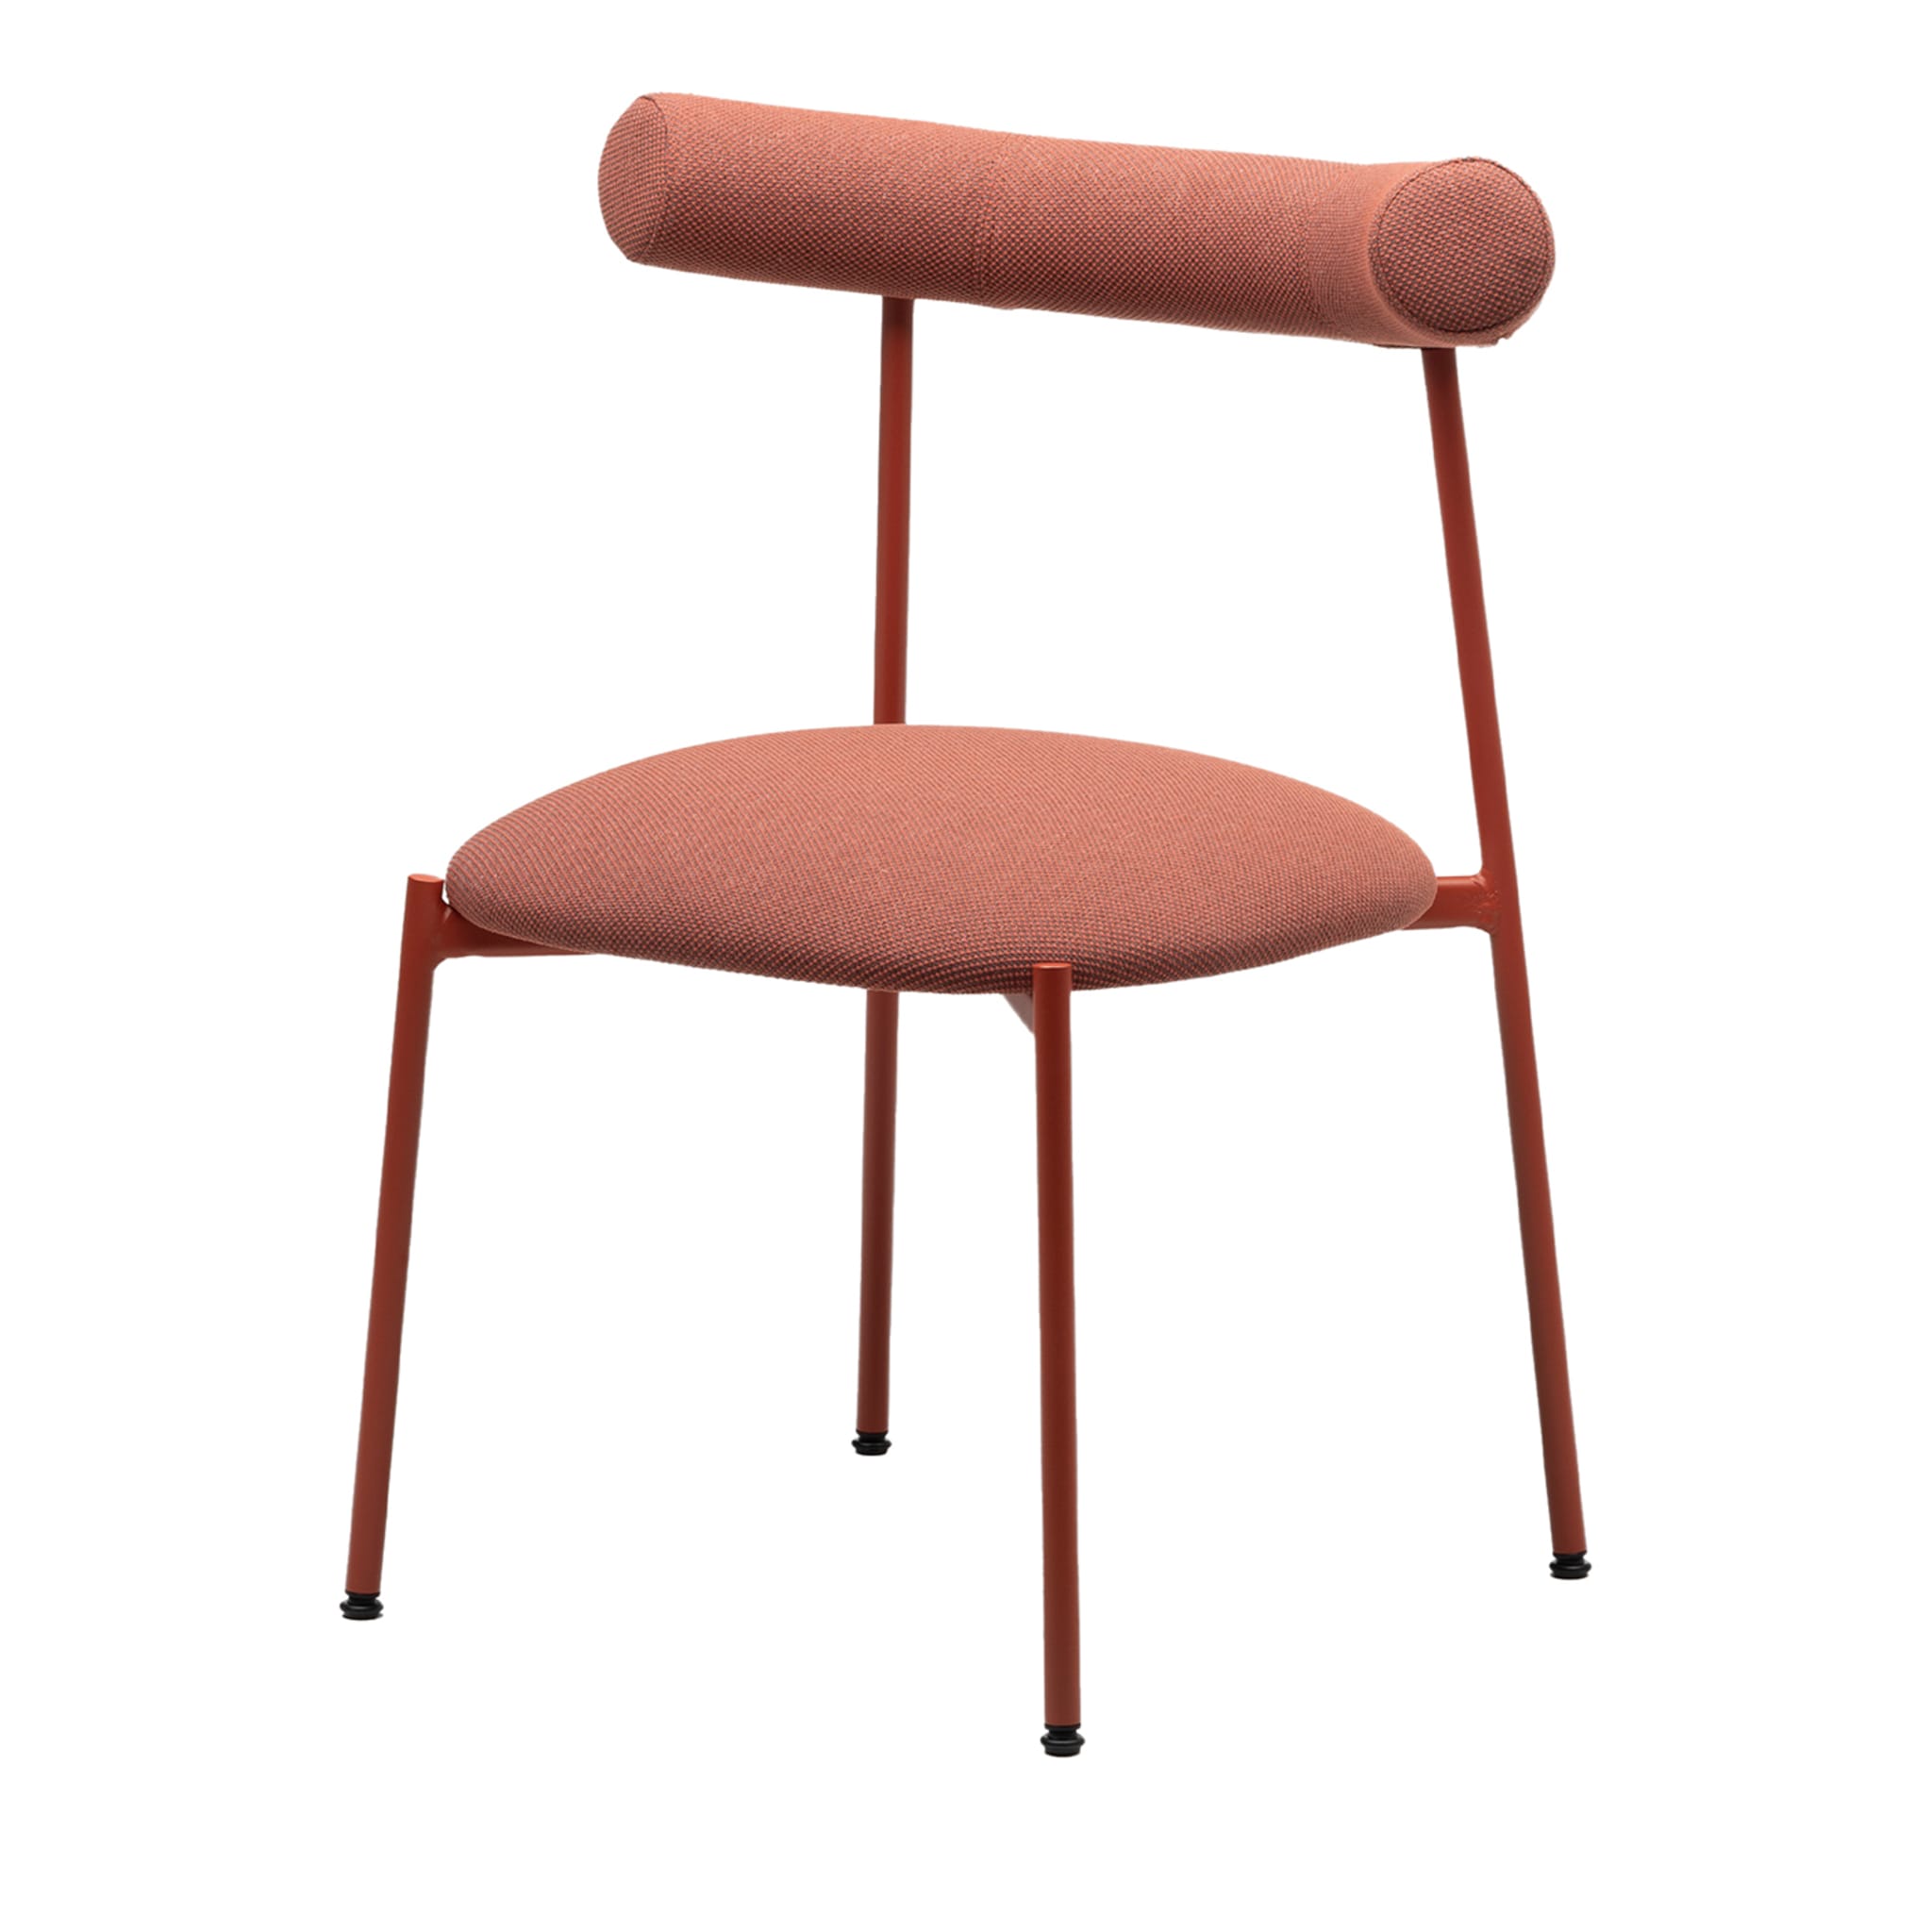 Pampa S Brick-Red Chair by Studio Pastina - Main view